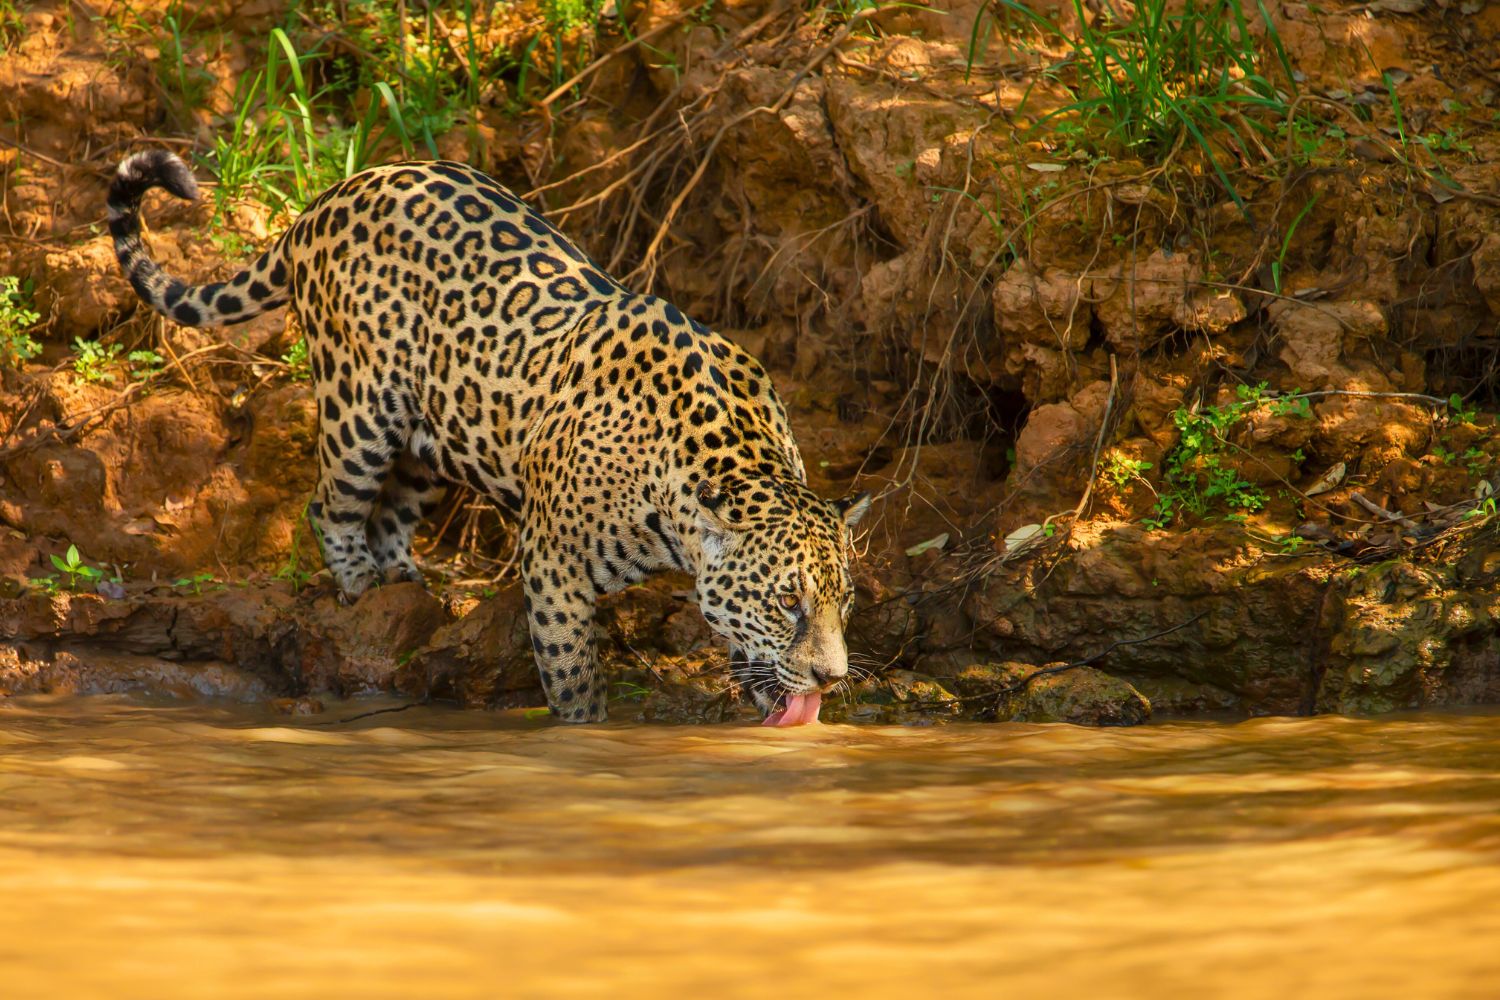 6. The jaguar habitat.